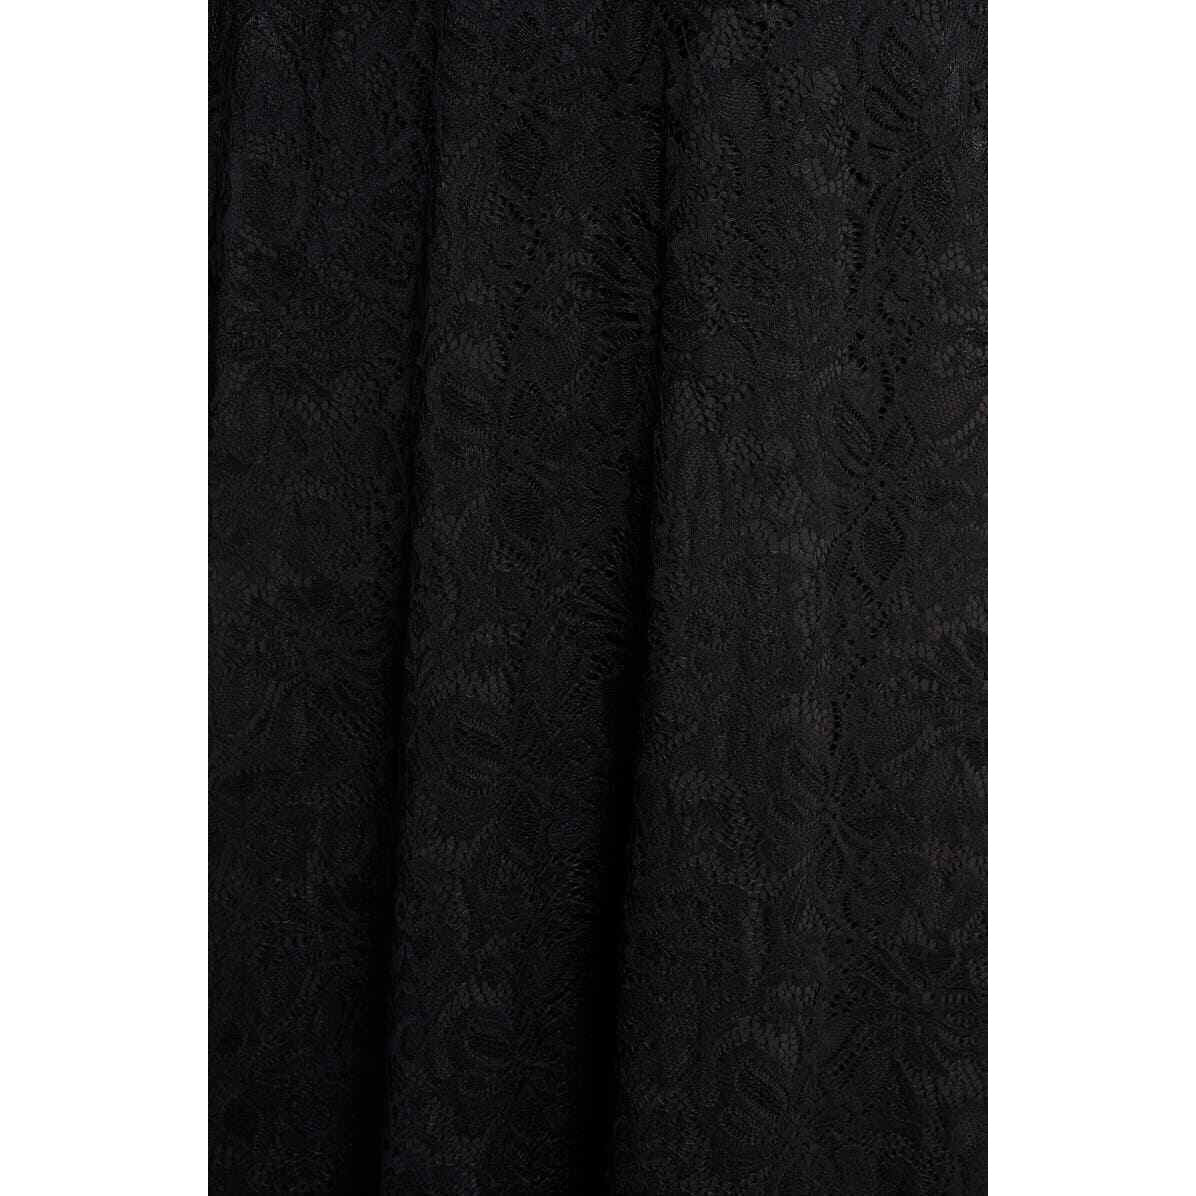 $228 Kiyonna Black Lace Leona Gown Elbow Sleeve Maxi Dress 1X Women's NWT